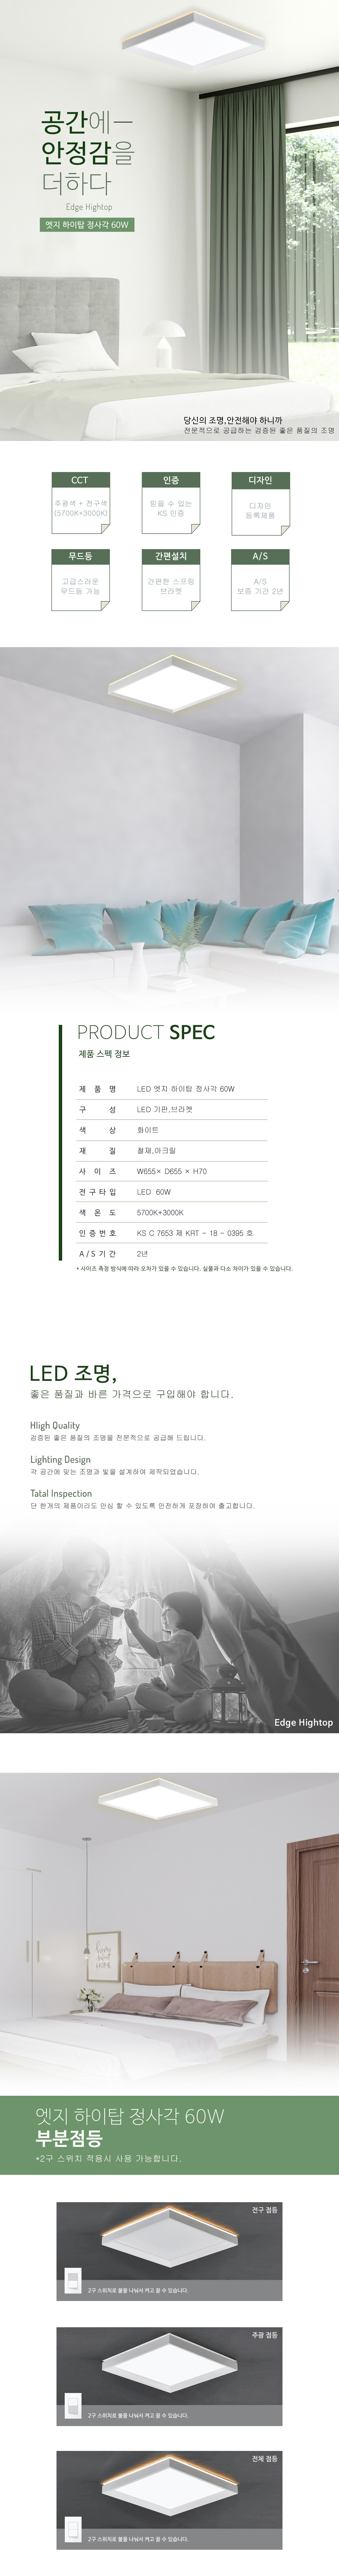 led_hightop_jung_60W_1_105427.jpg